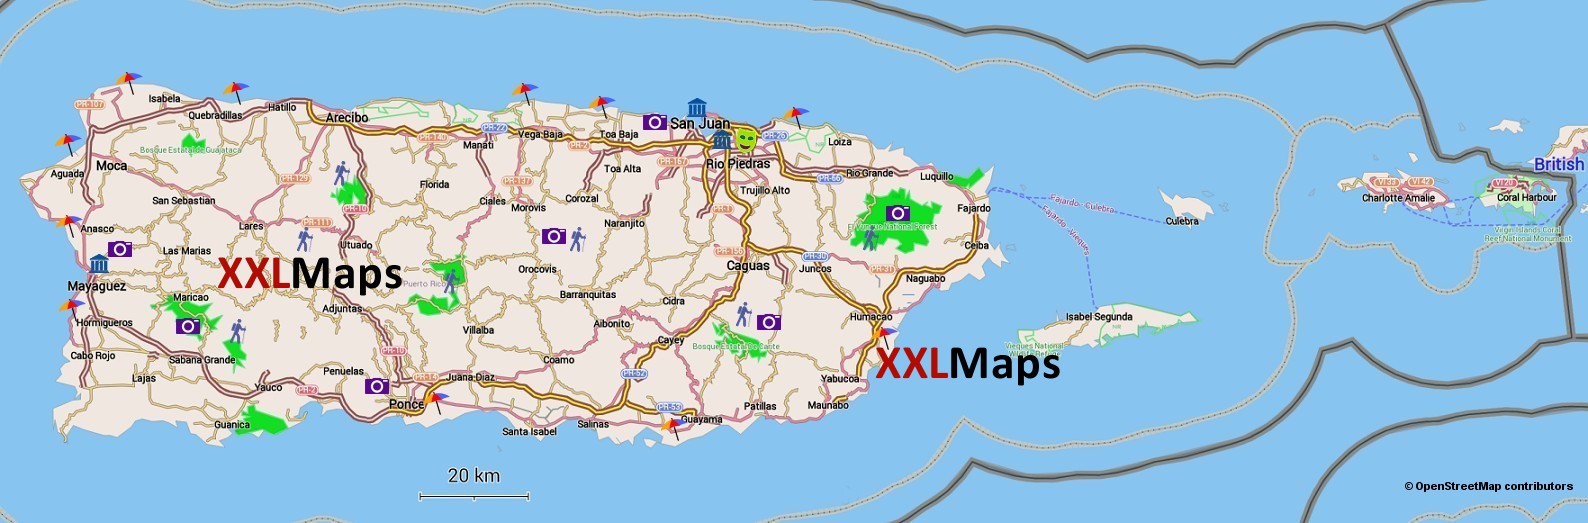 Turist kart over Puerto Rico